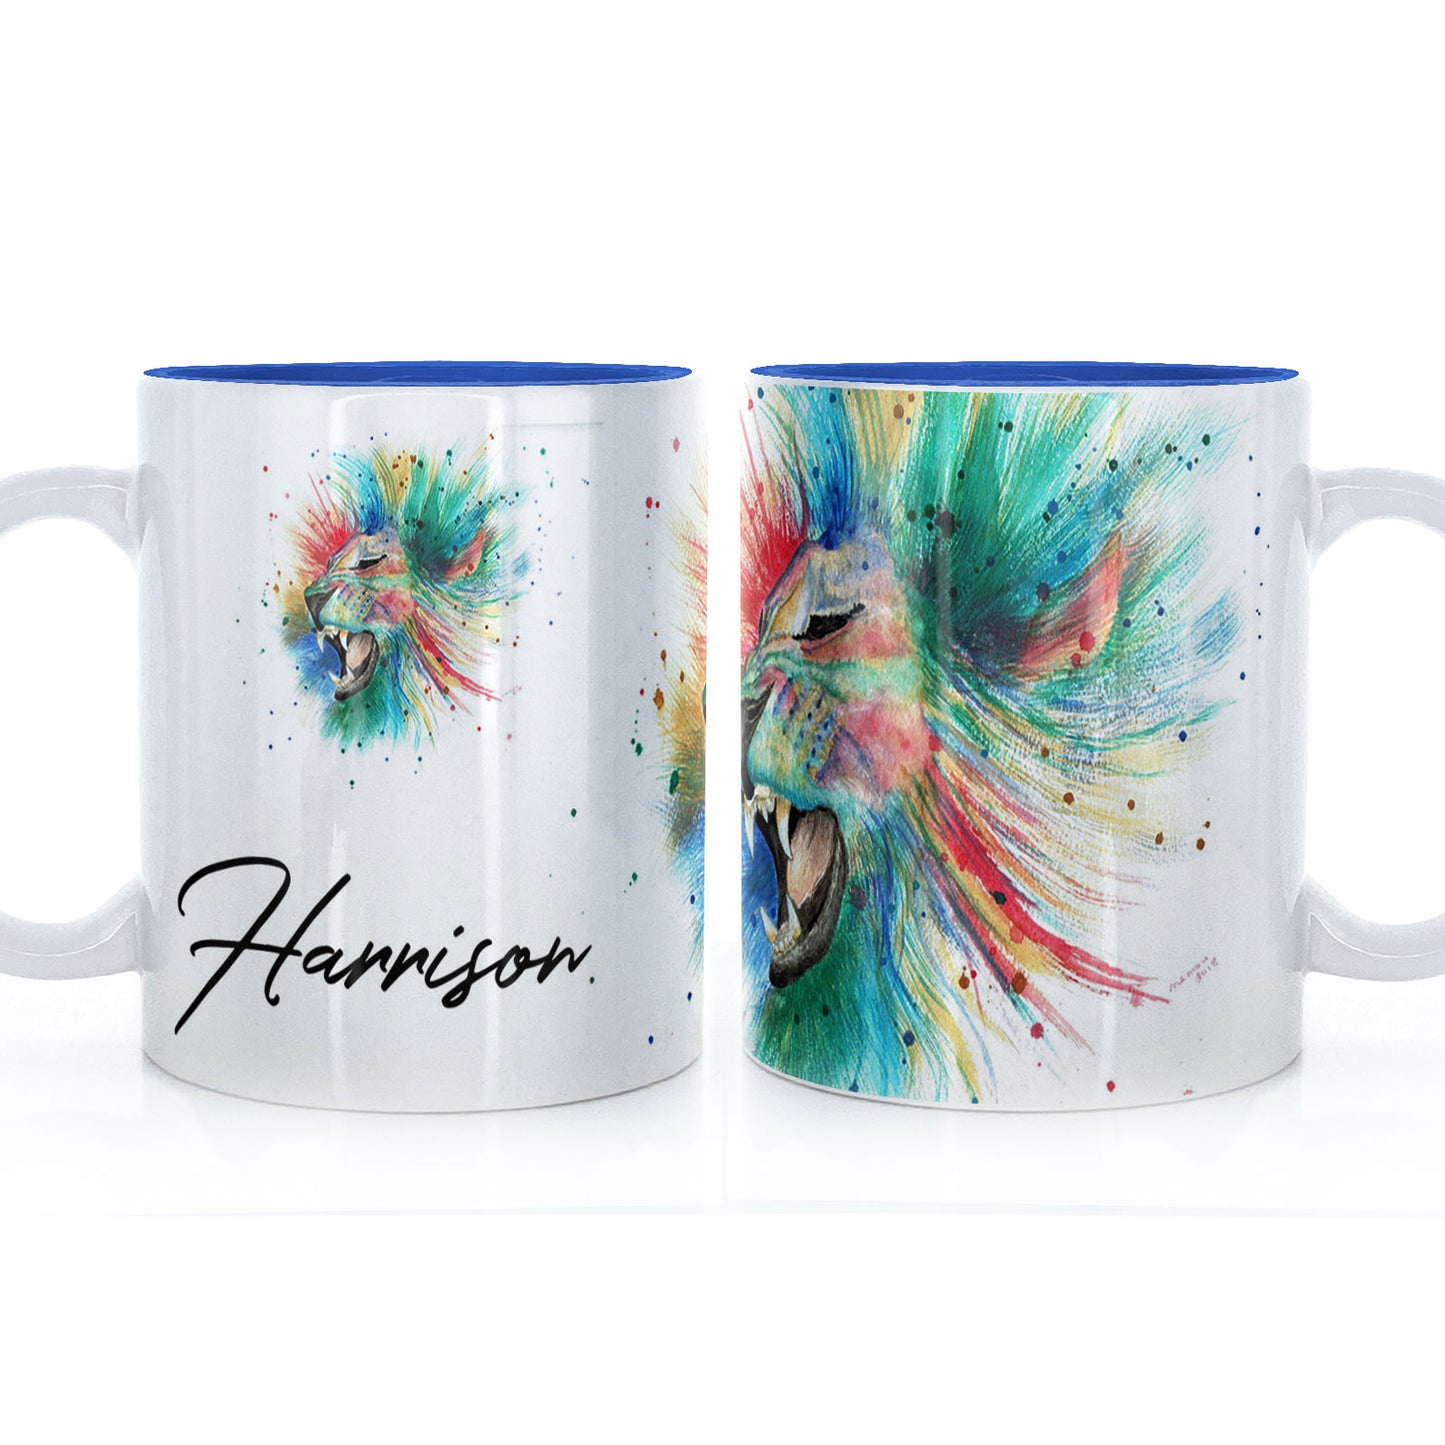 Personalised Mug with Stylish Text and Rainbow Lion